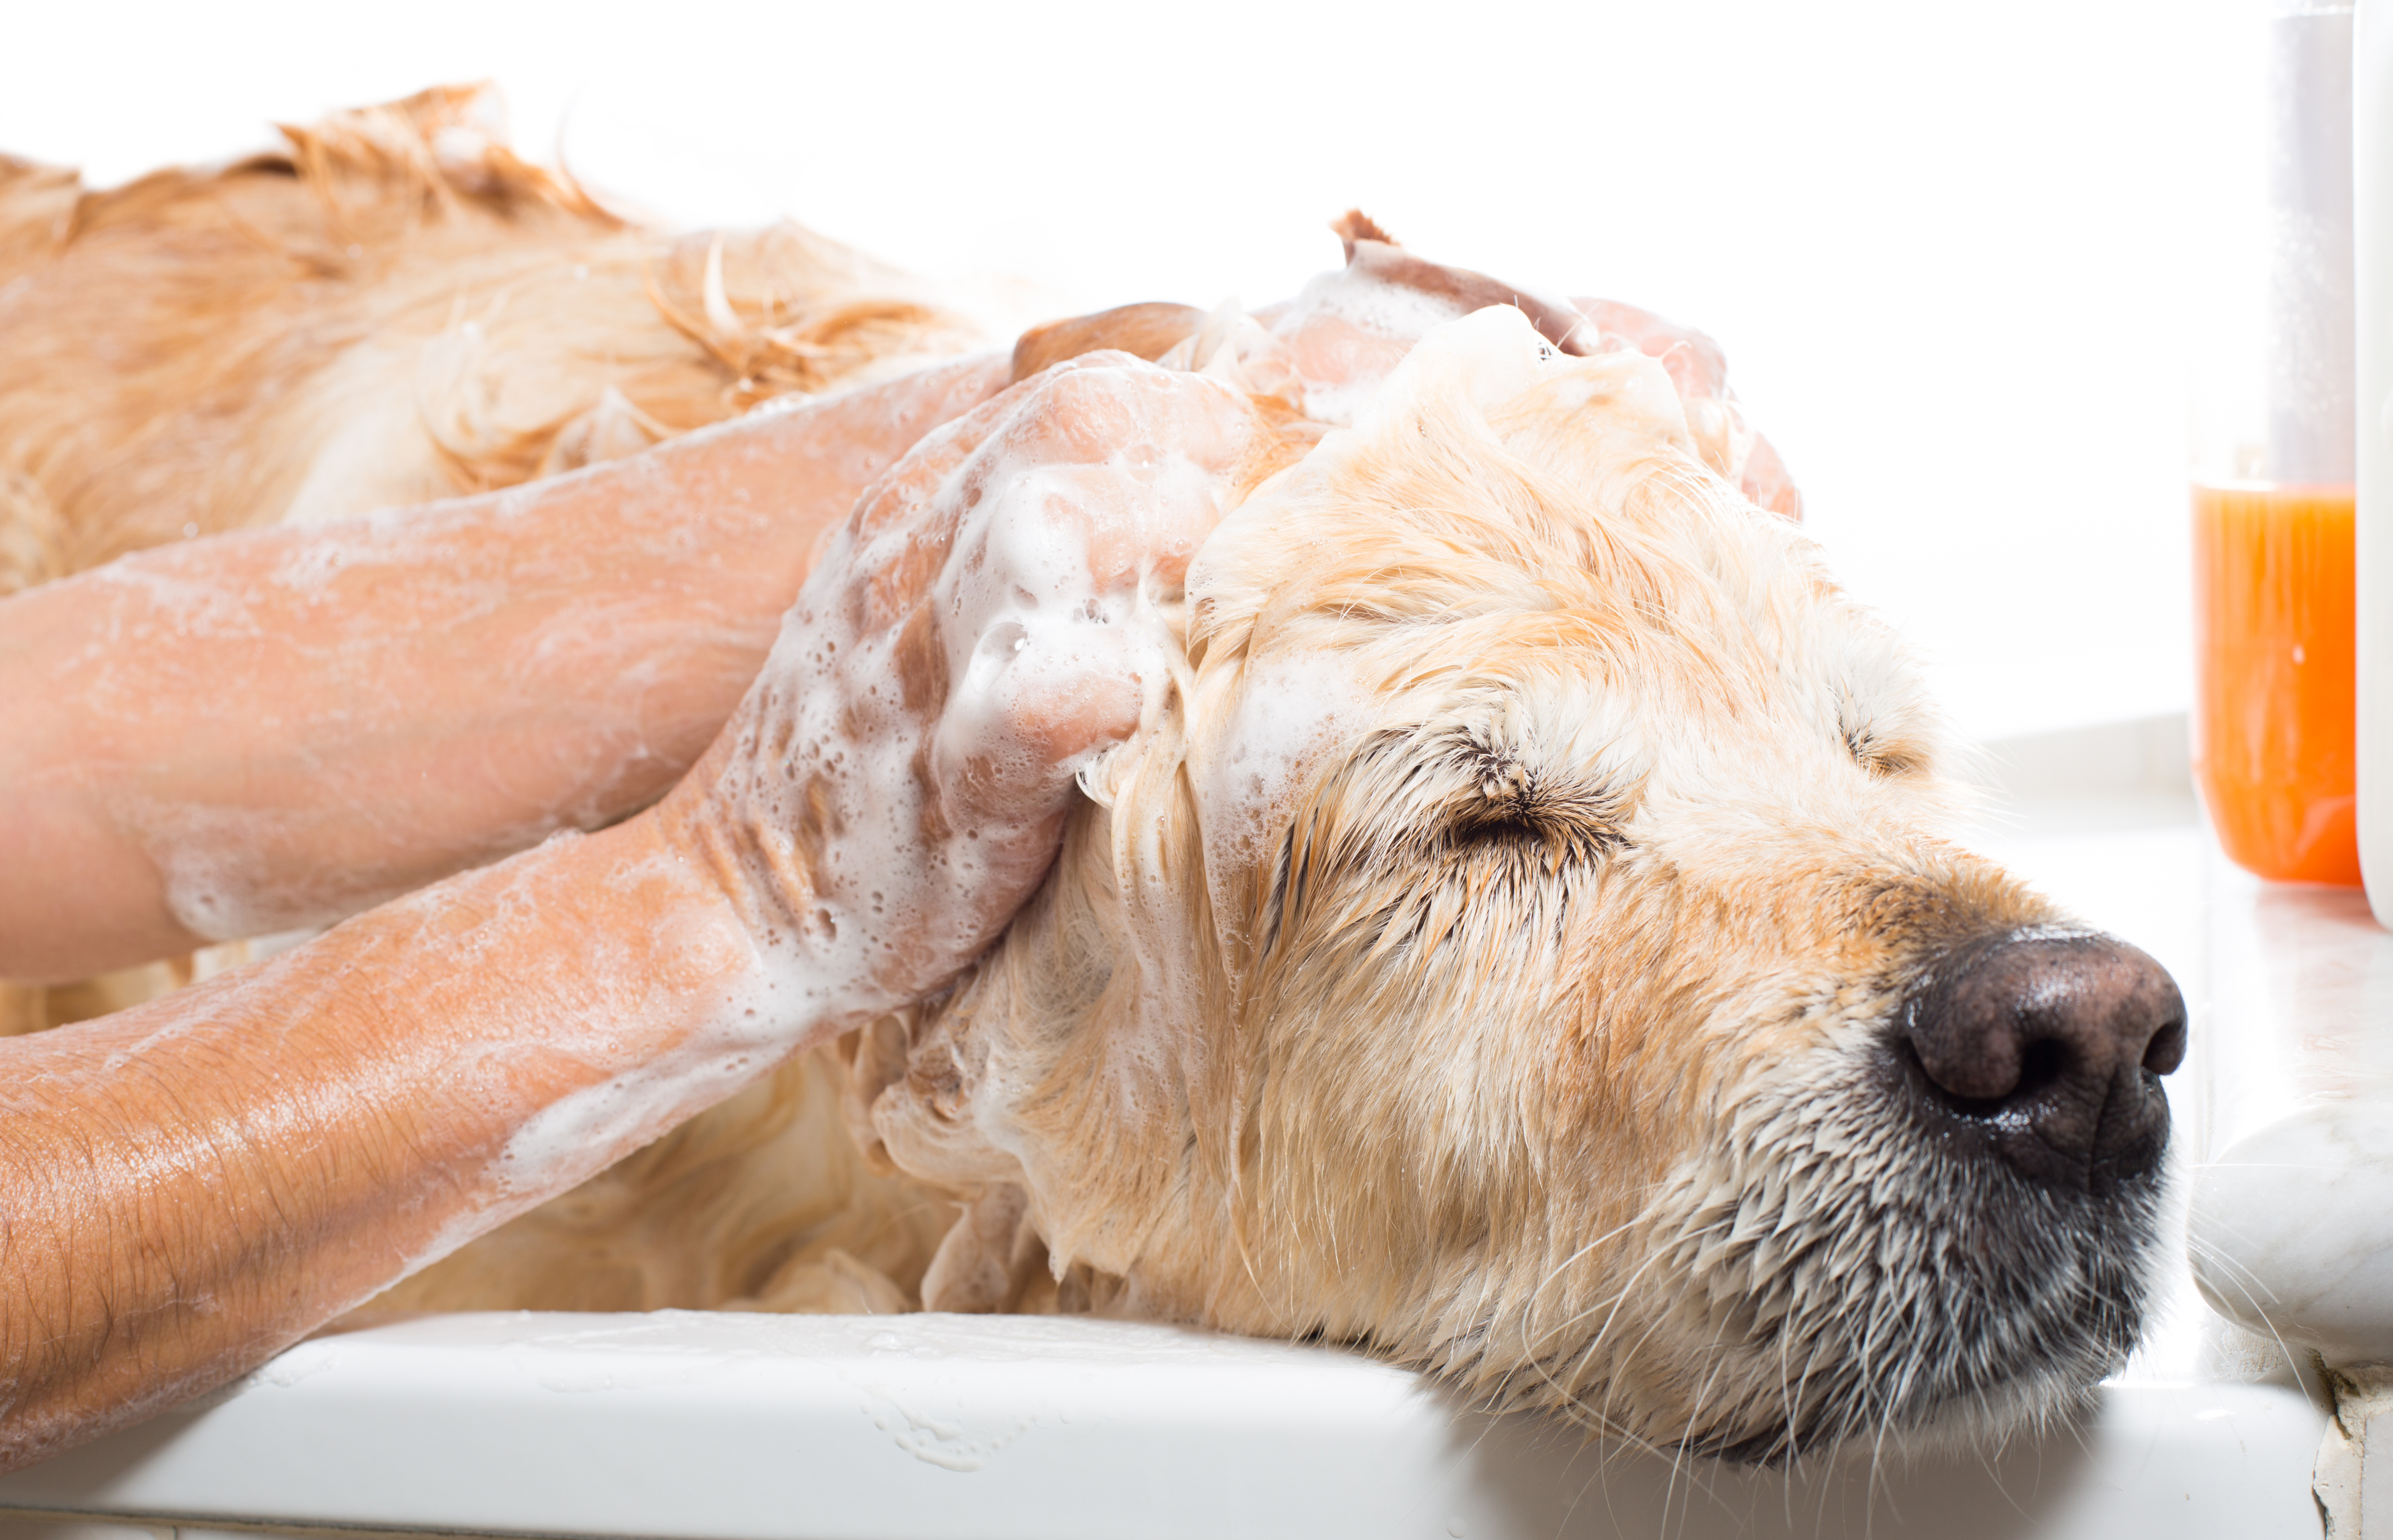 Puppy enjoying getting shampooed with best puppy shampoo